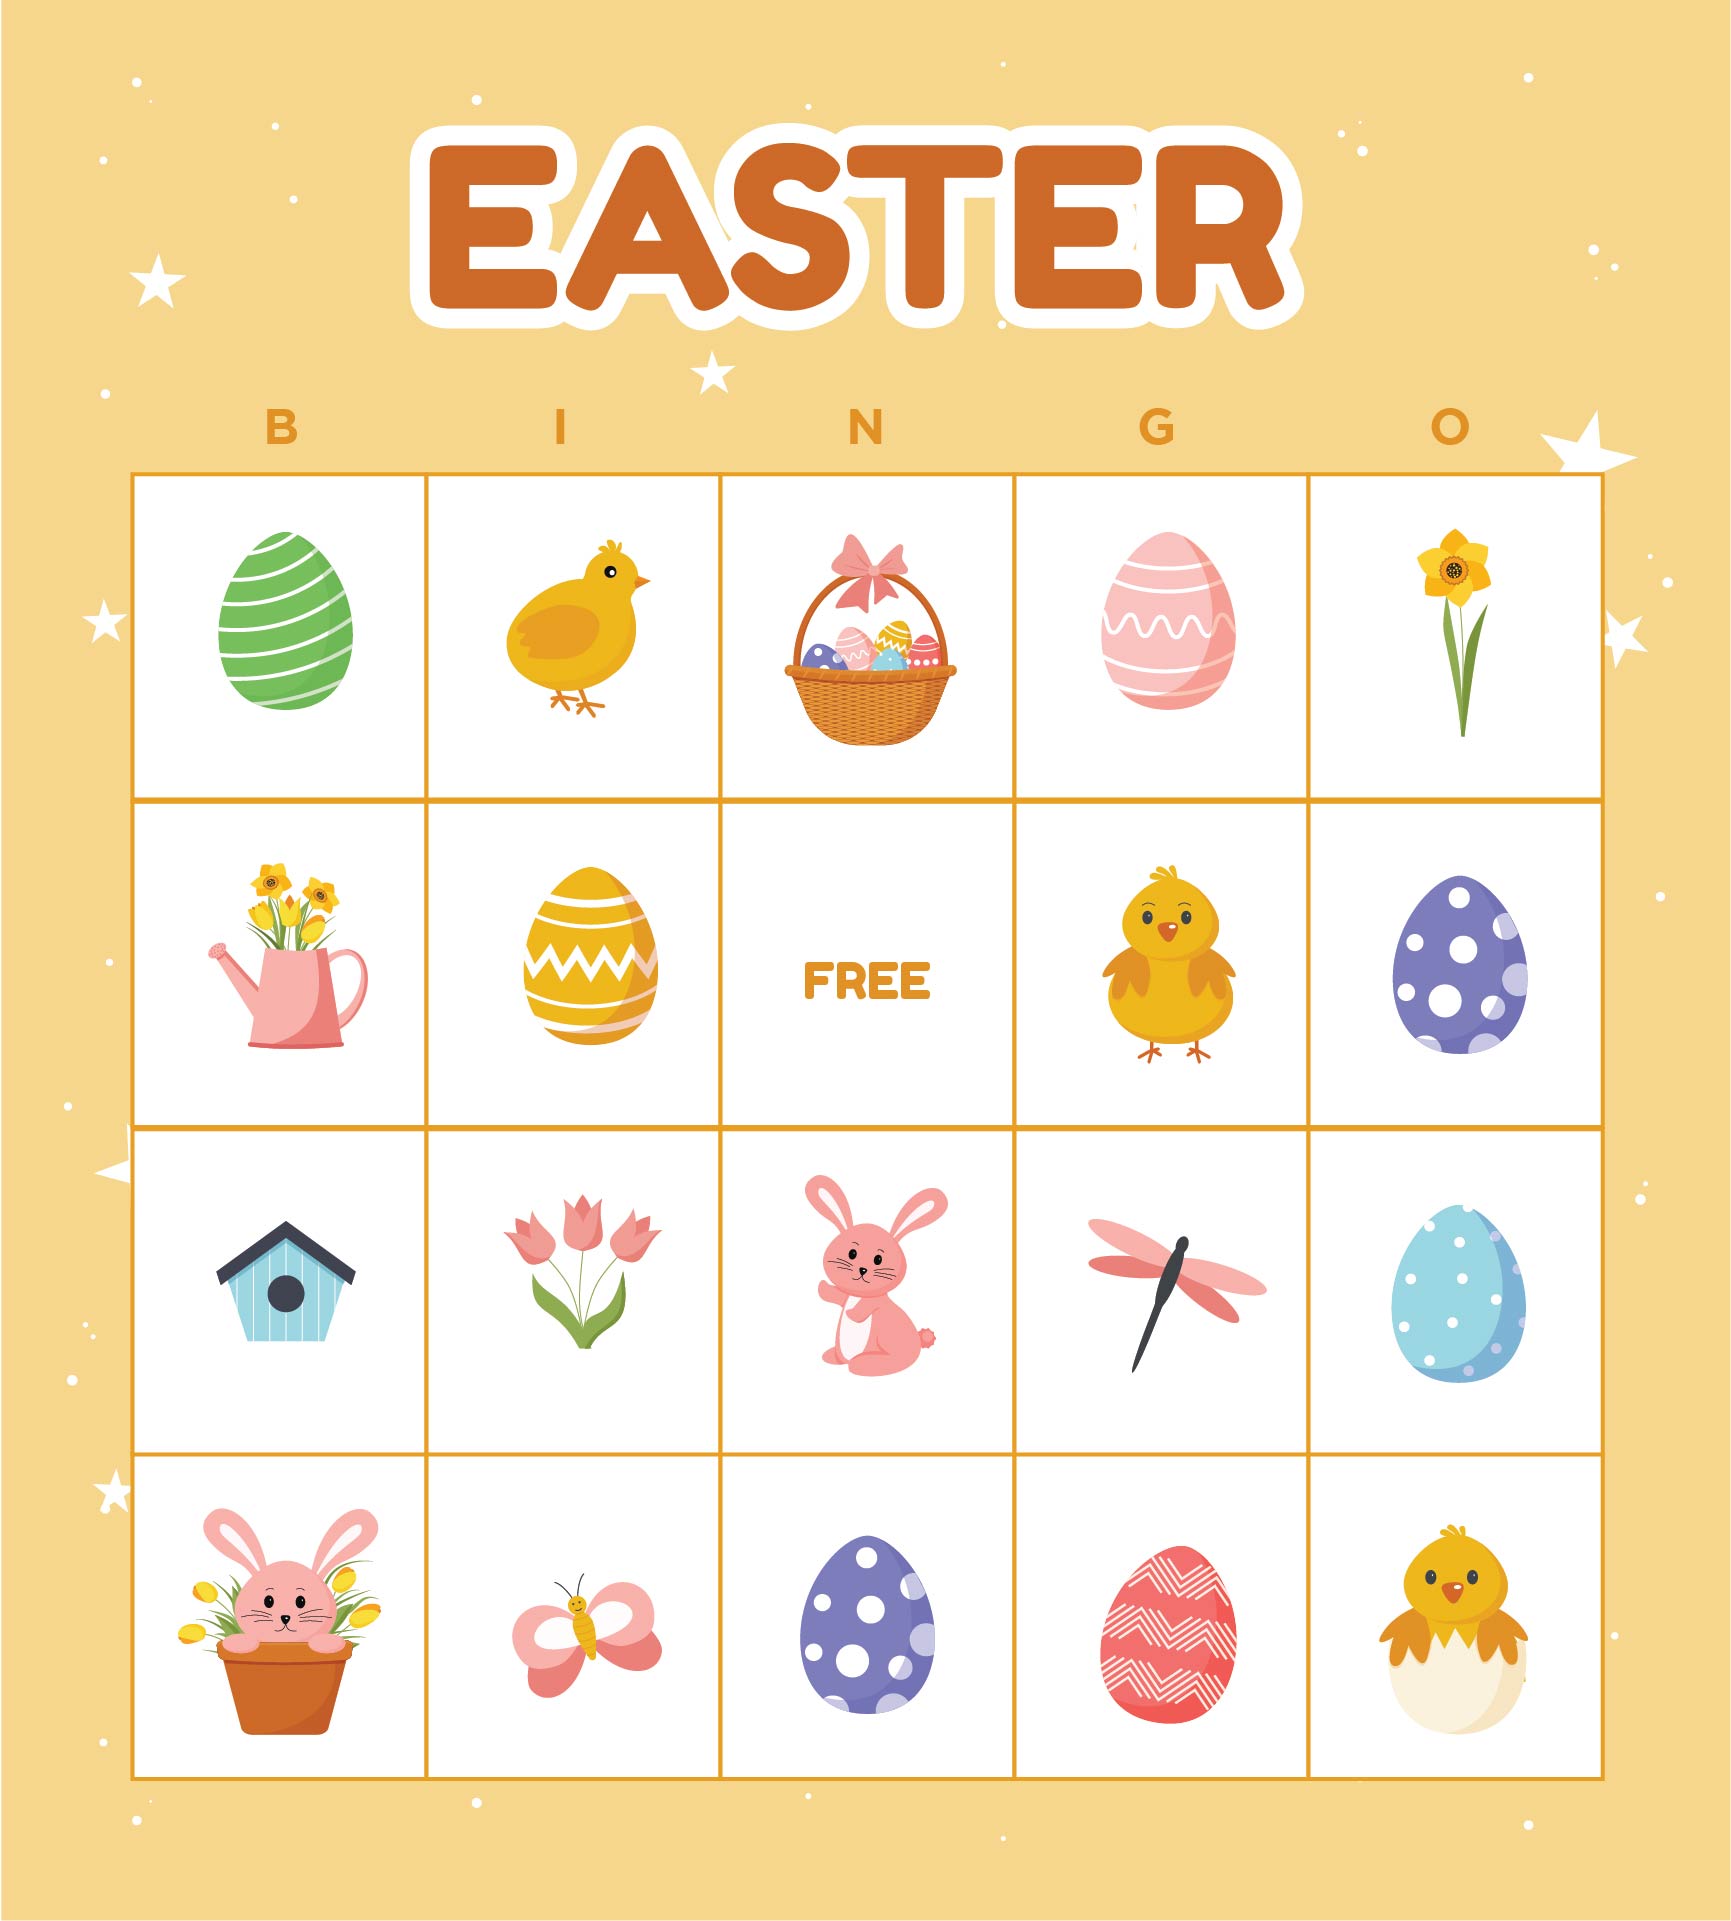 Easter Bingo Game Cards